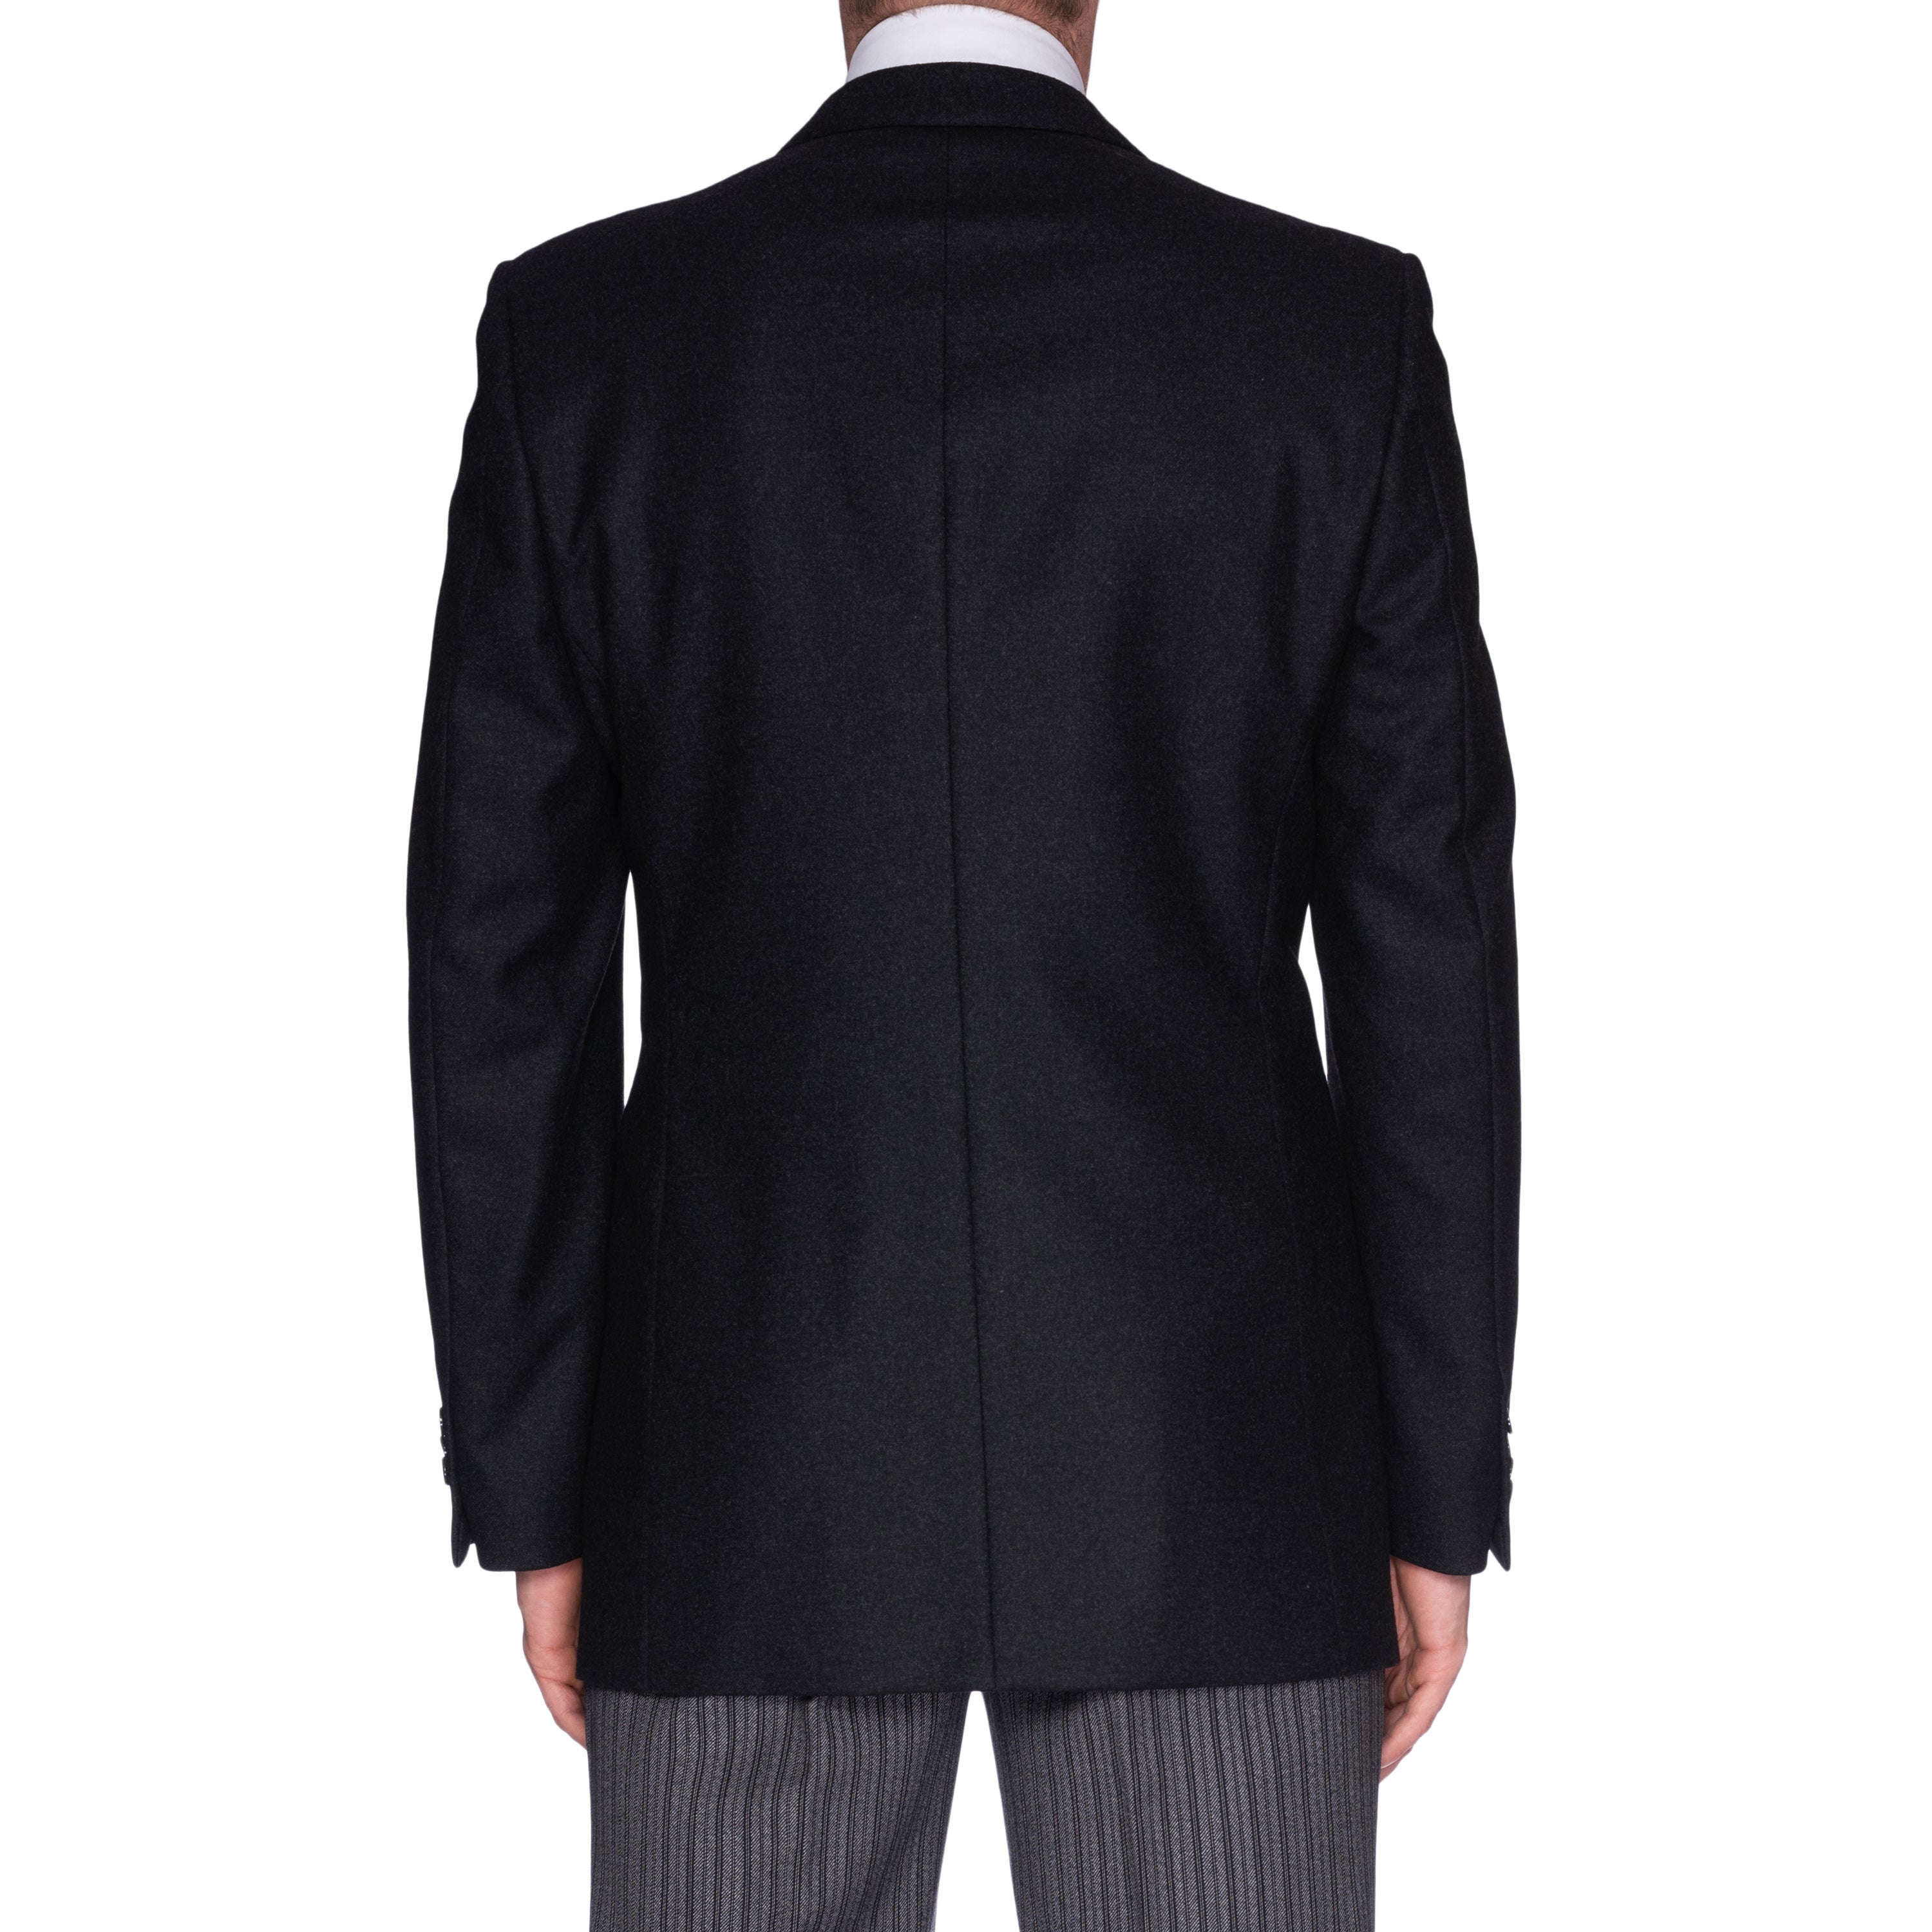 SARTORIA CASTANGIA Gray Merino Wool 1 Button Morning Wedding Suit EU 52 NEW US 42 CASTANGIA